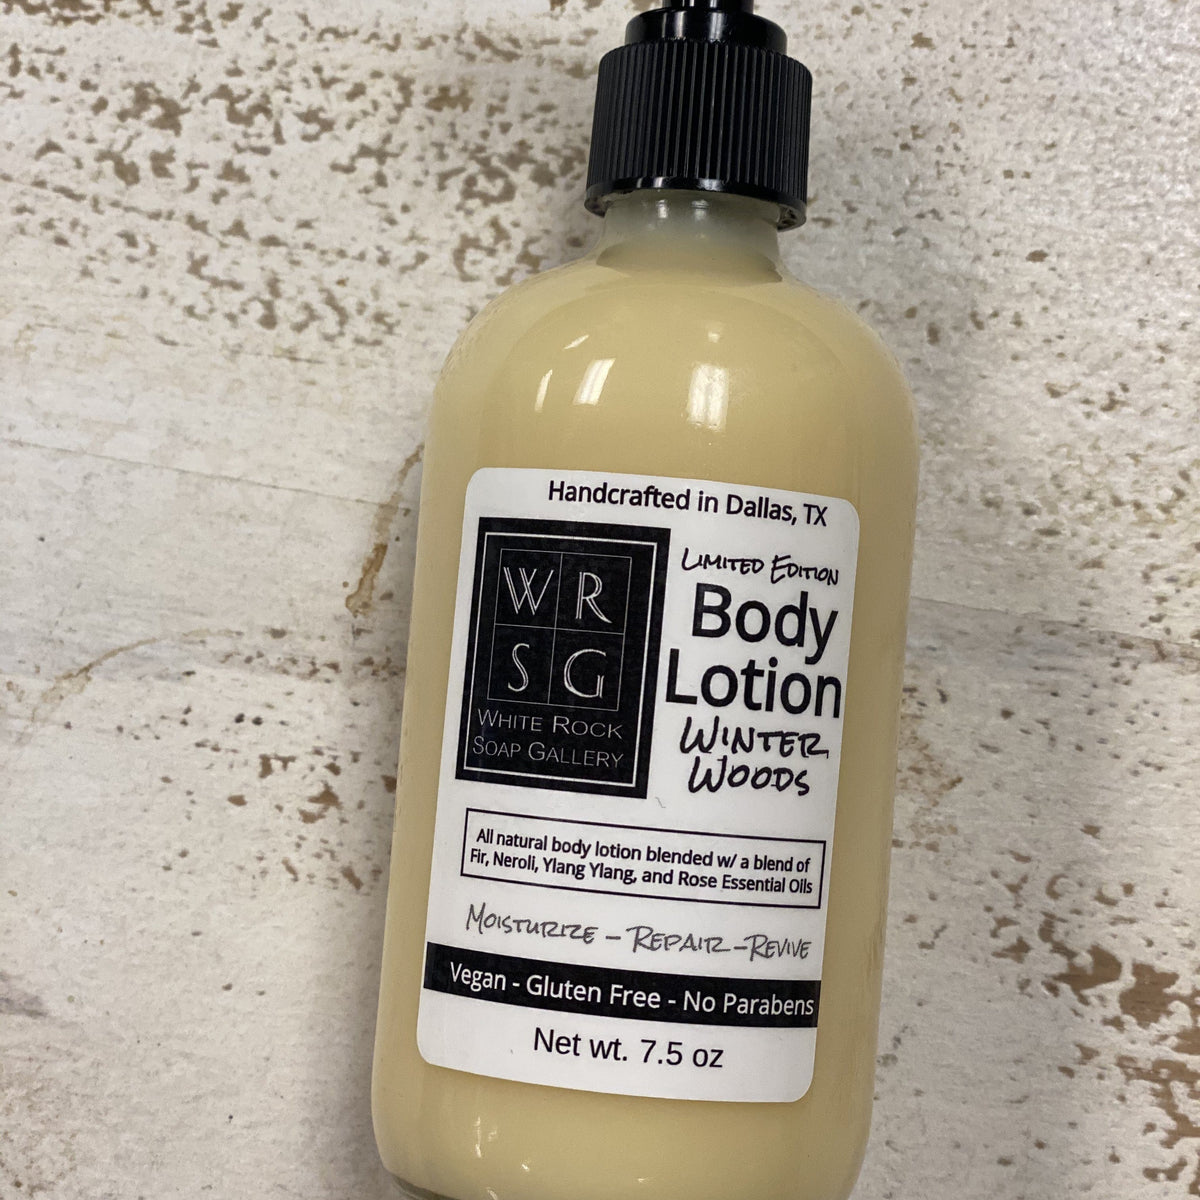 Body Lotion - Warm Vanilla Chai Limited Edition